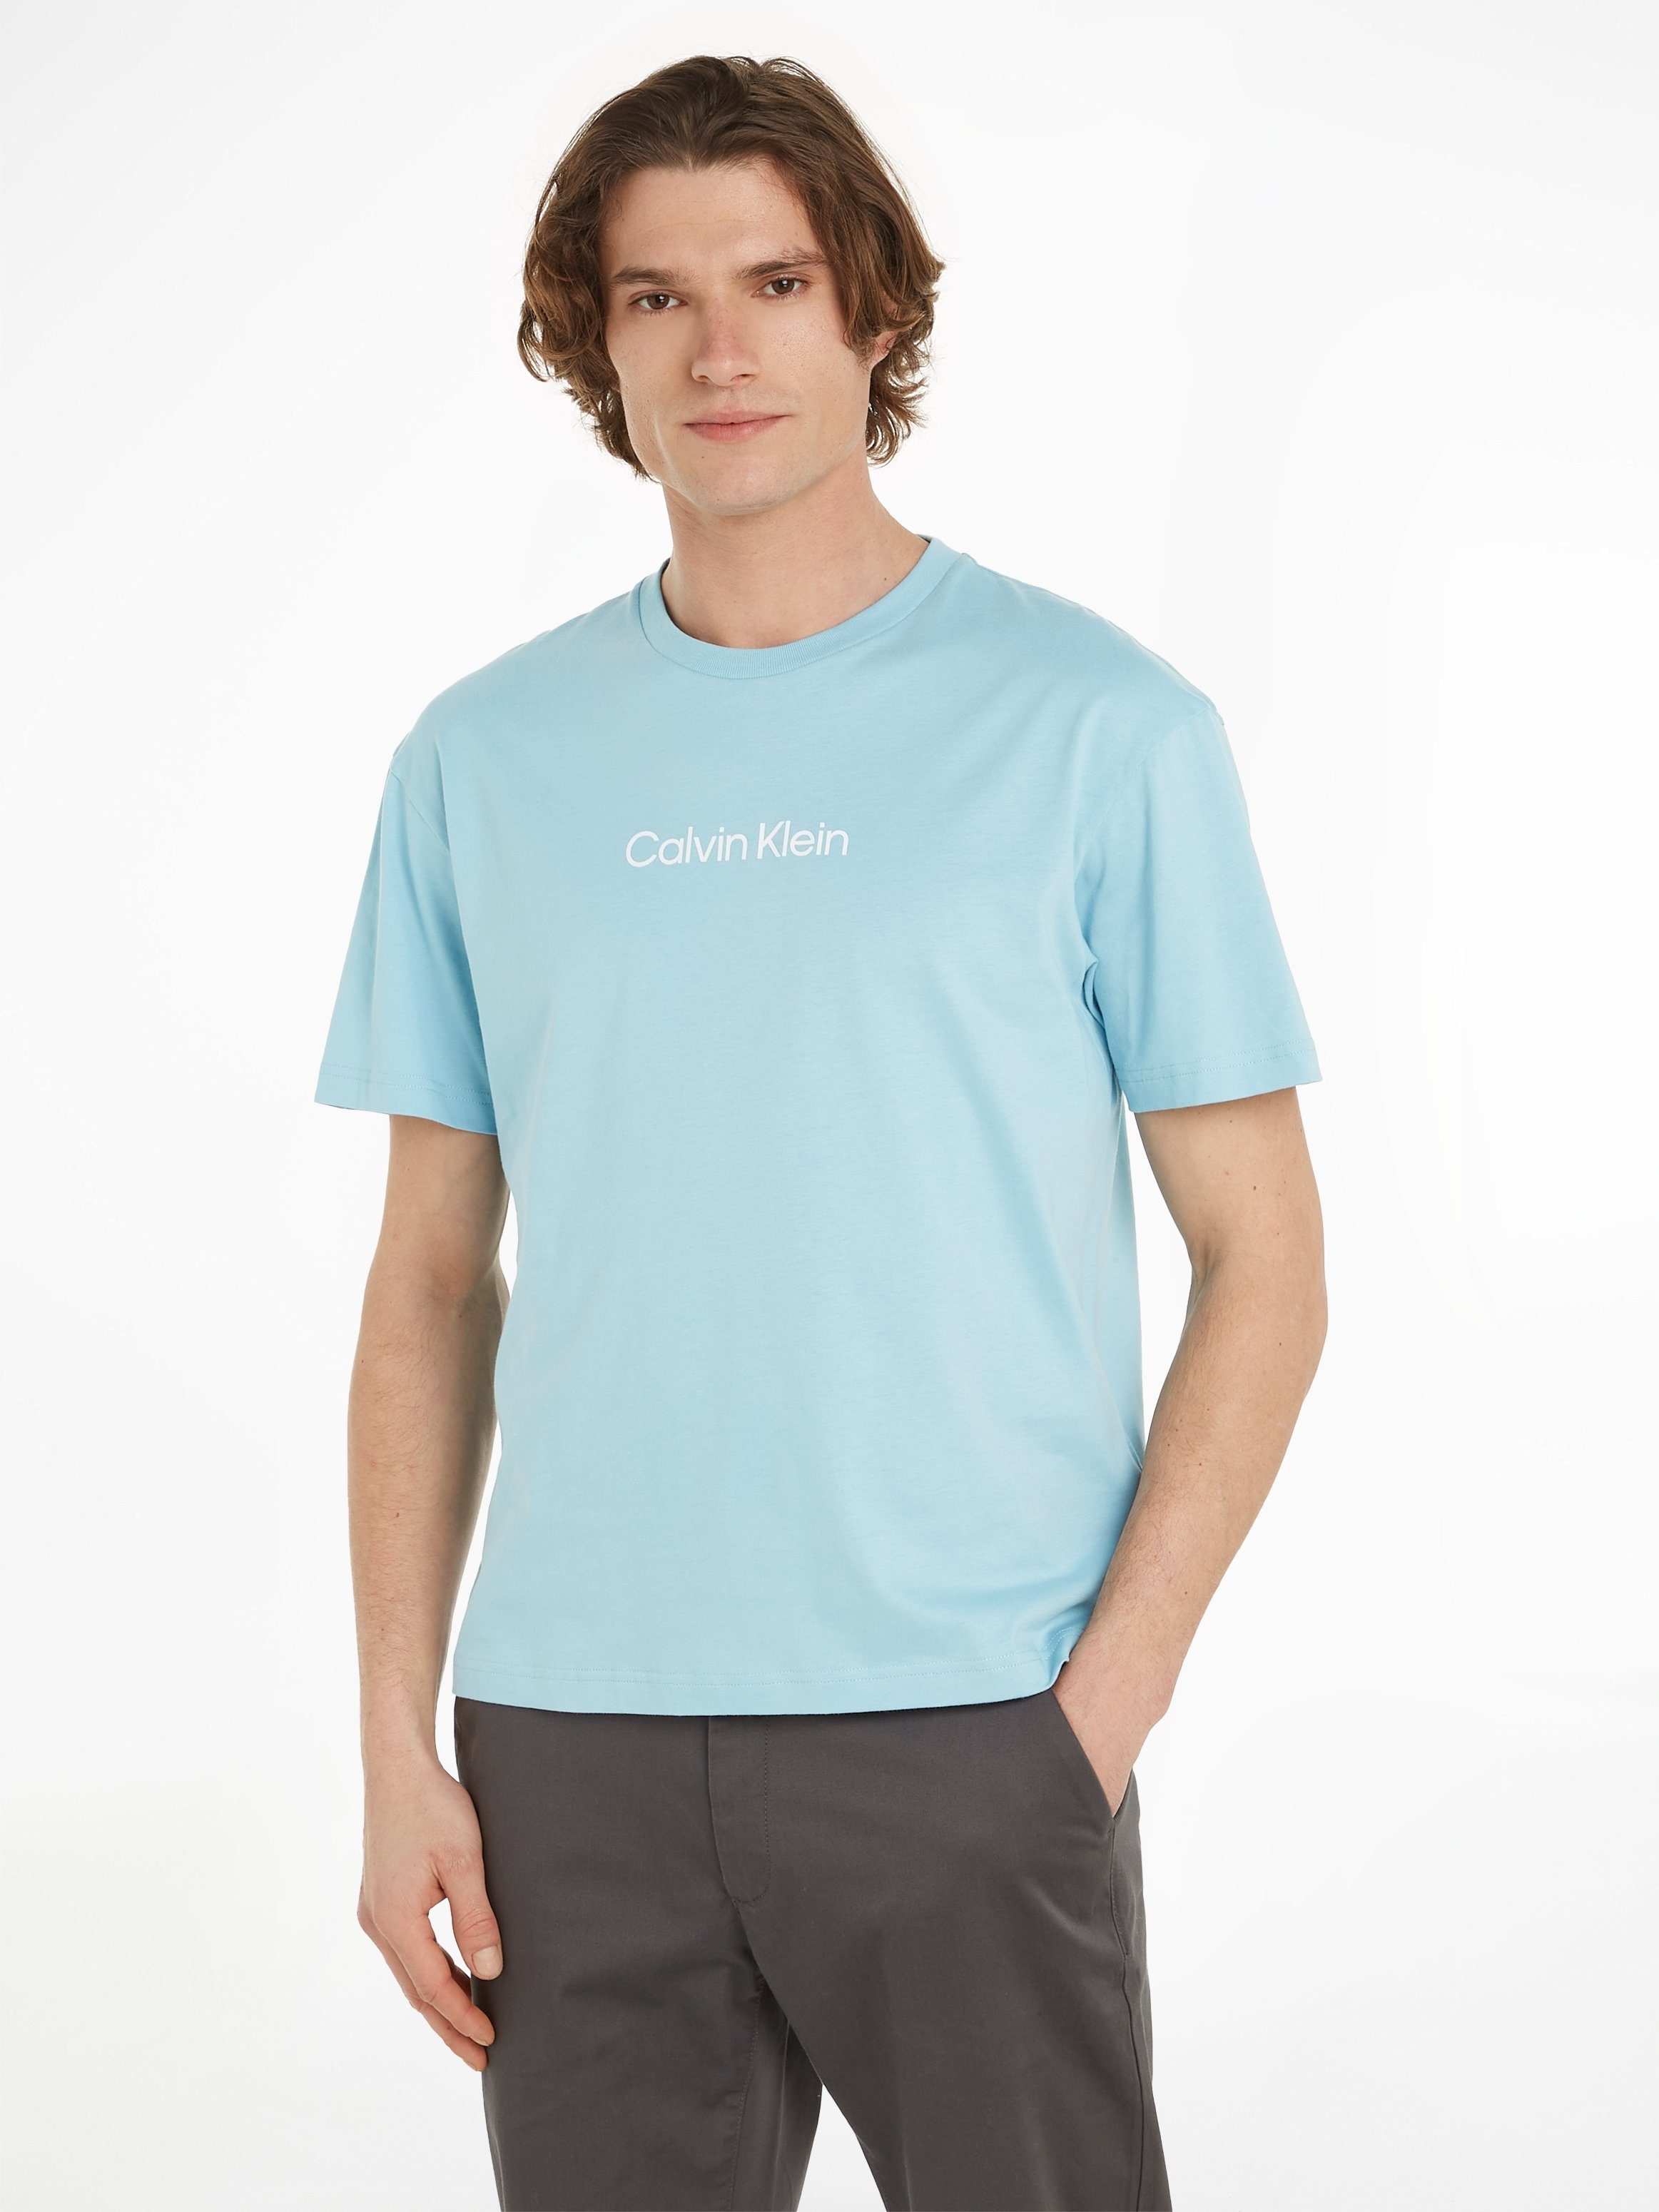 T-Shirt aufgedrucktem HERO Blue Markenlabel Calvin T-SHIRT Tropic LOGO Klein COMFORT mit